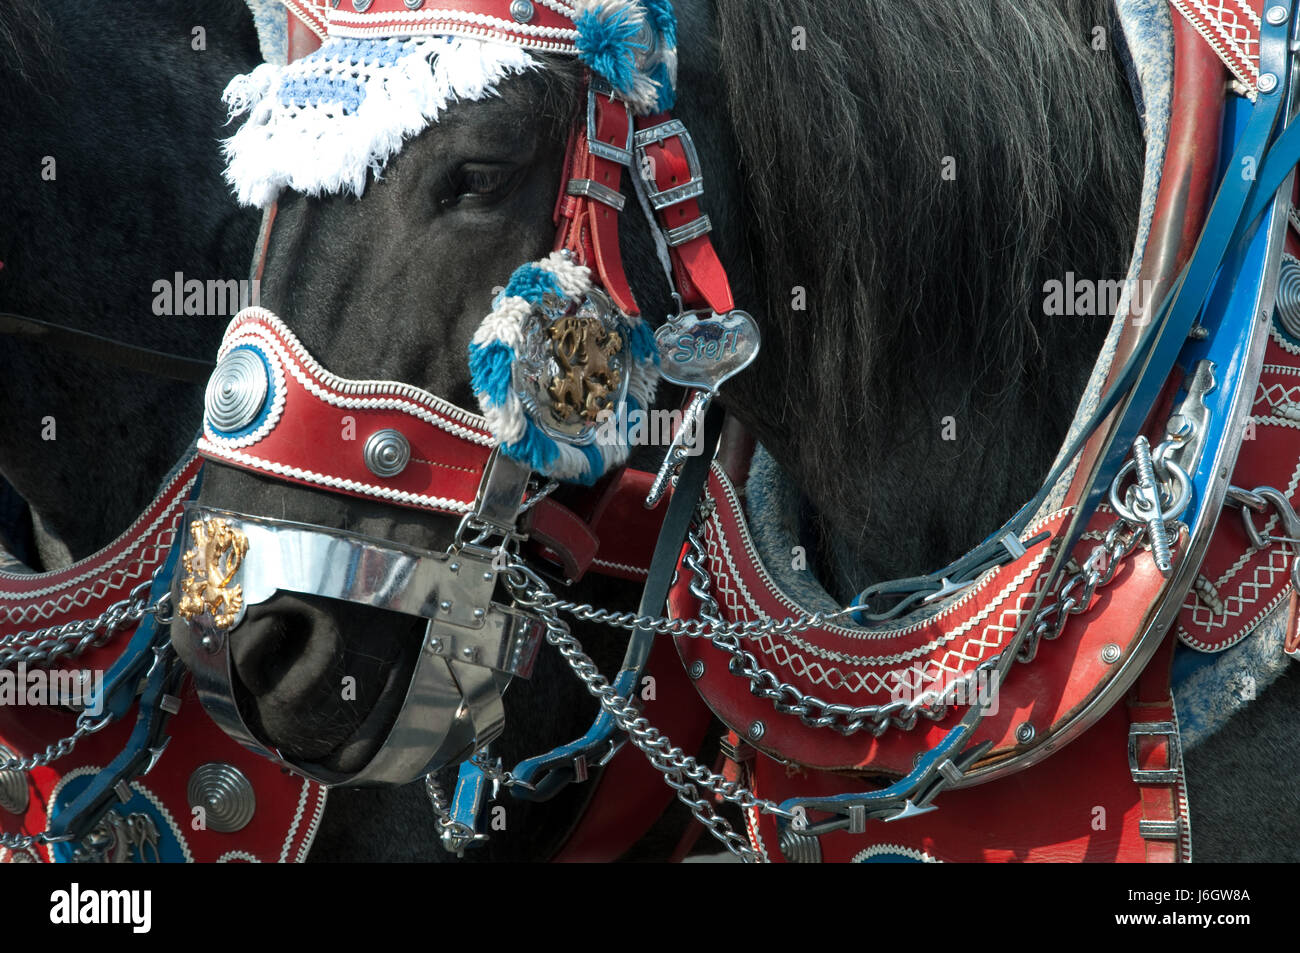 Joyería del caballo fotografías e imágenes de alta resolución - Alamy